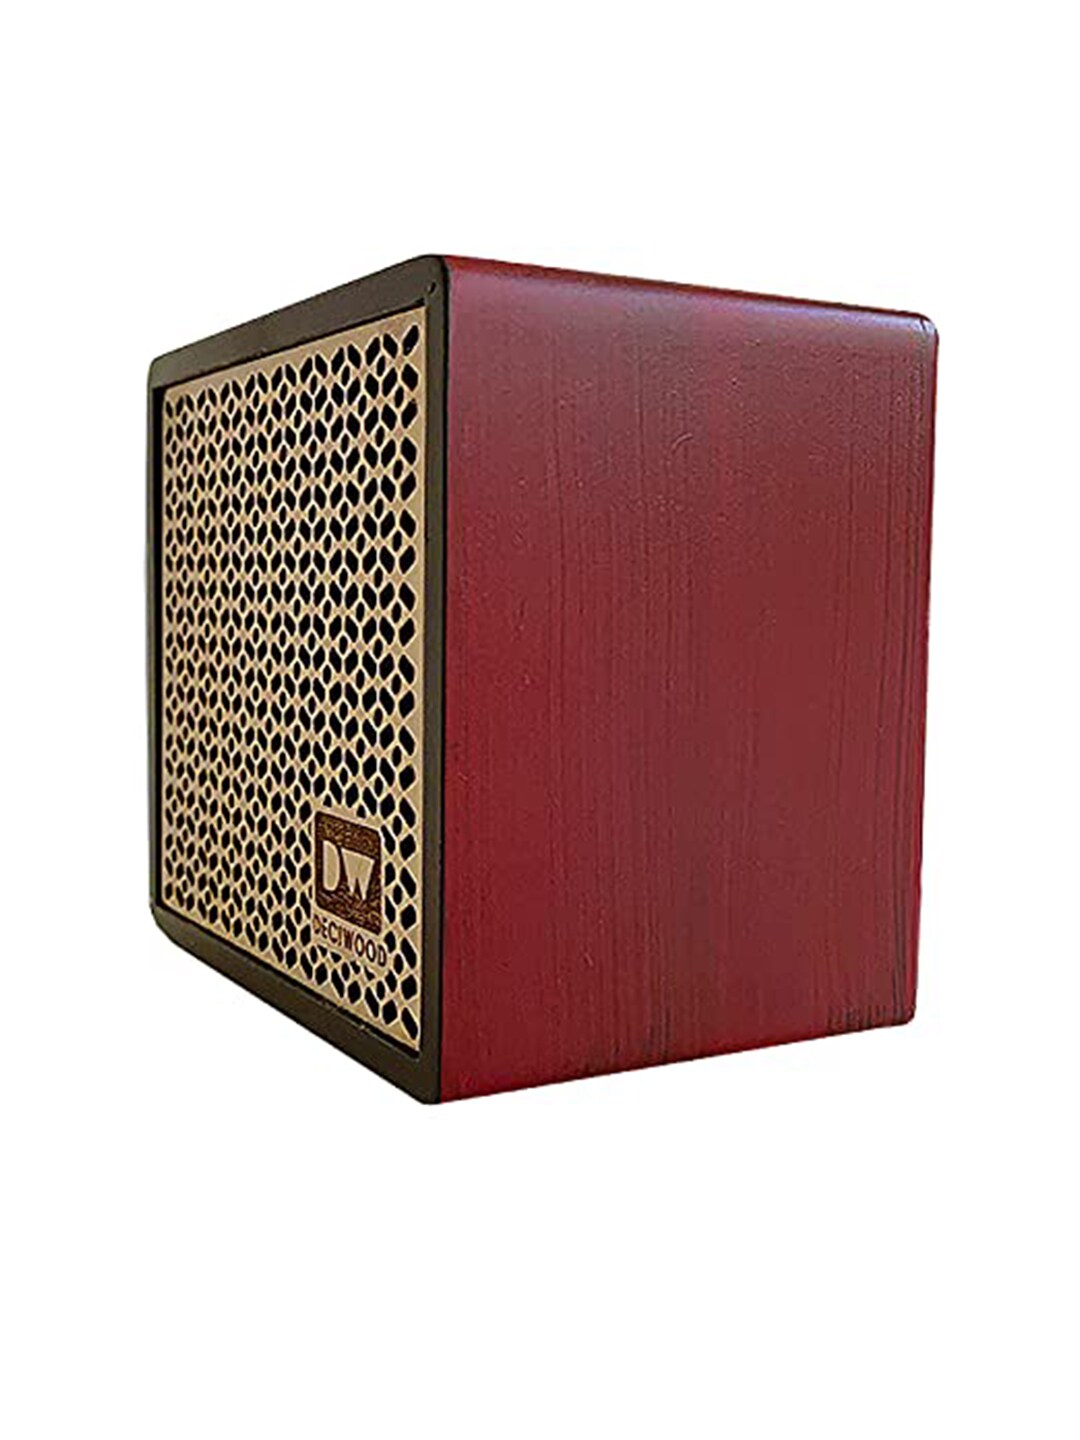 DECIWOOD Cherry-Red & Beige Textured Wooden Portable Bluetooth Speaker Price in India